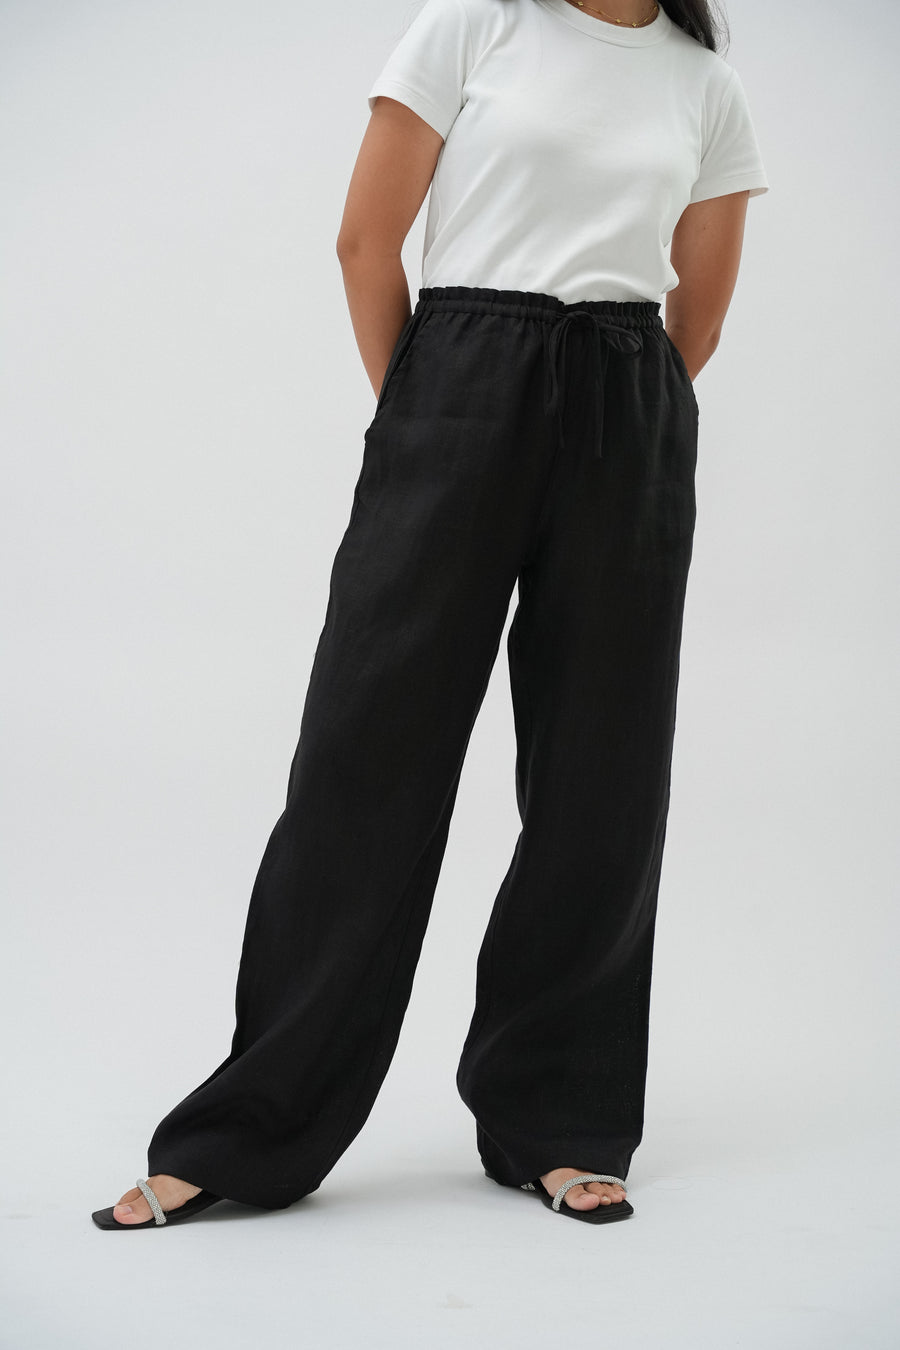 Brunch Linen Pants in Black